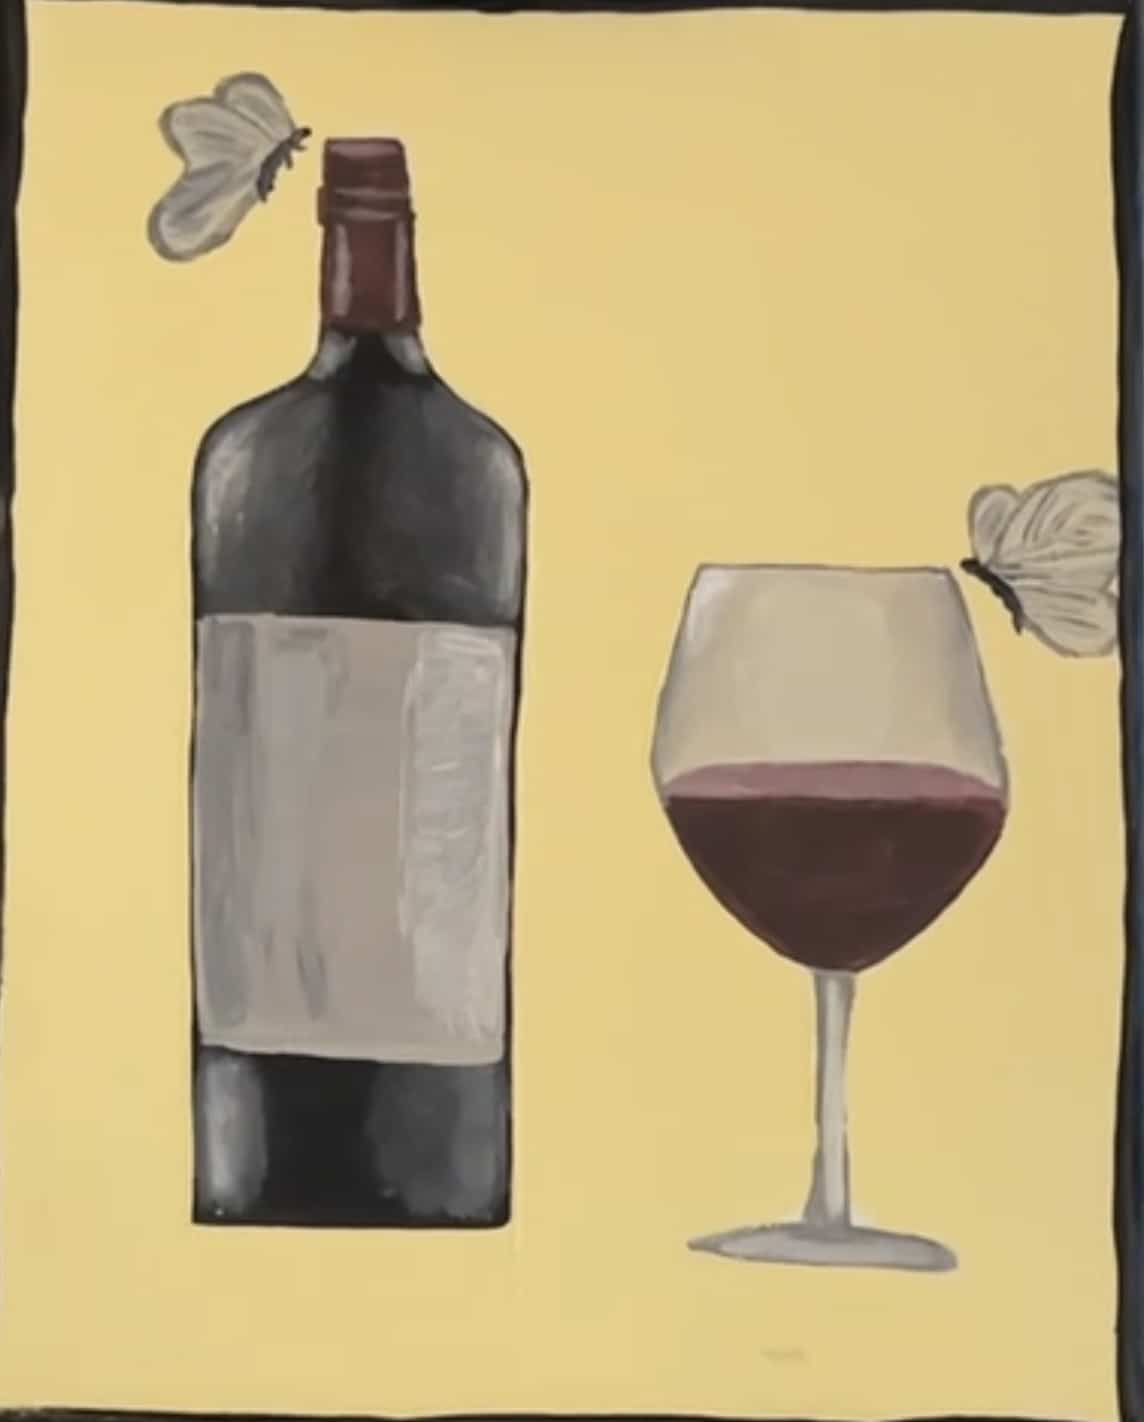 Wine glass painting